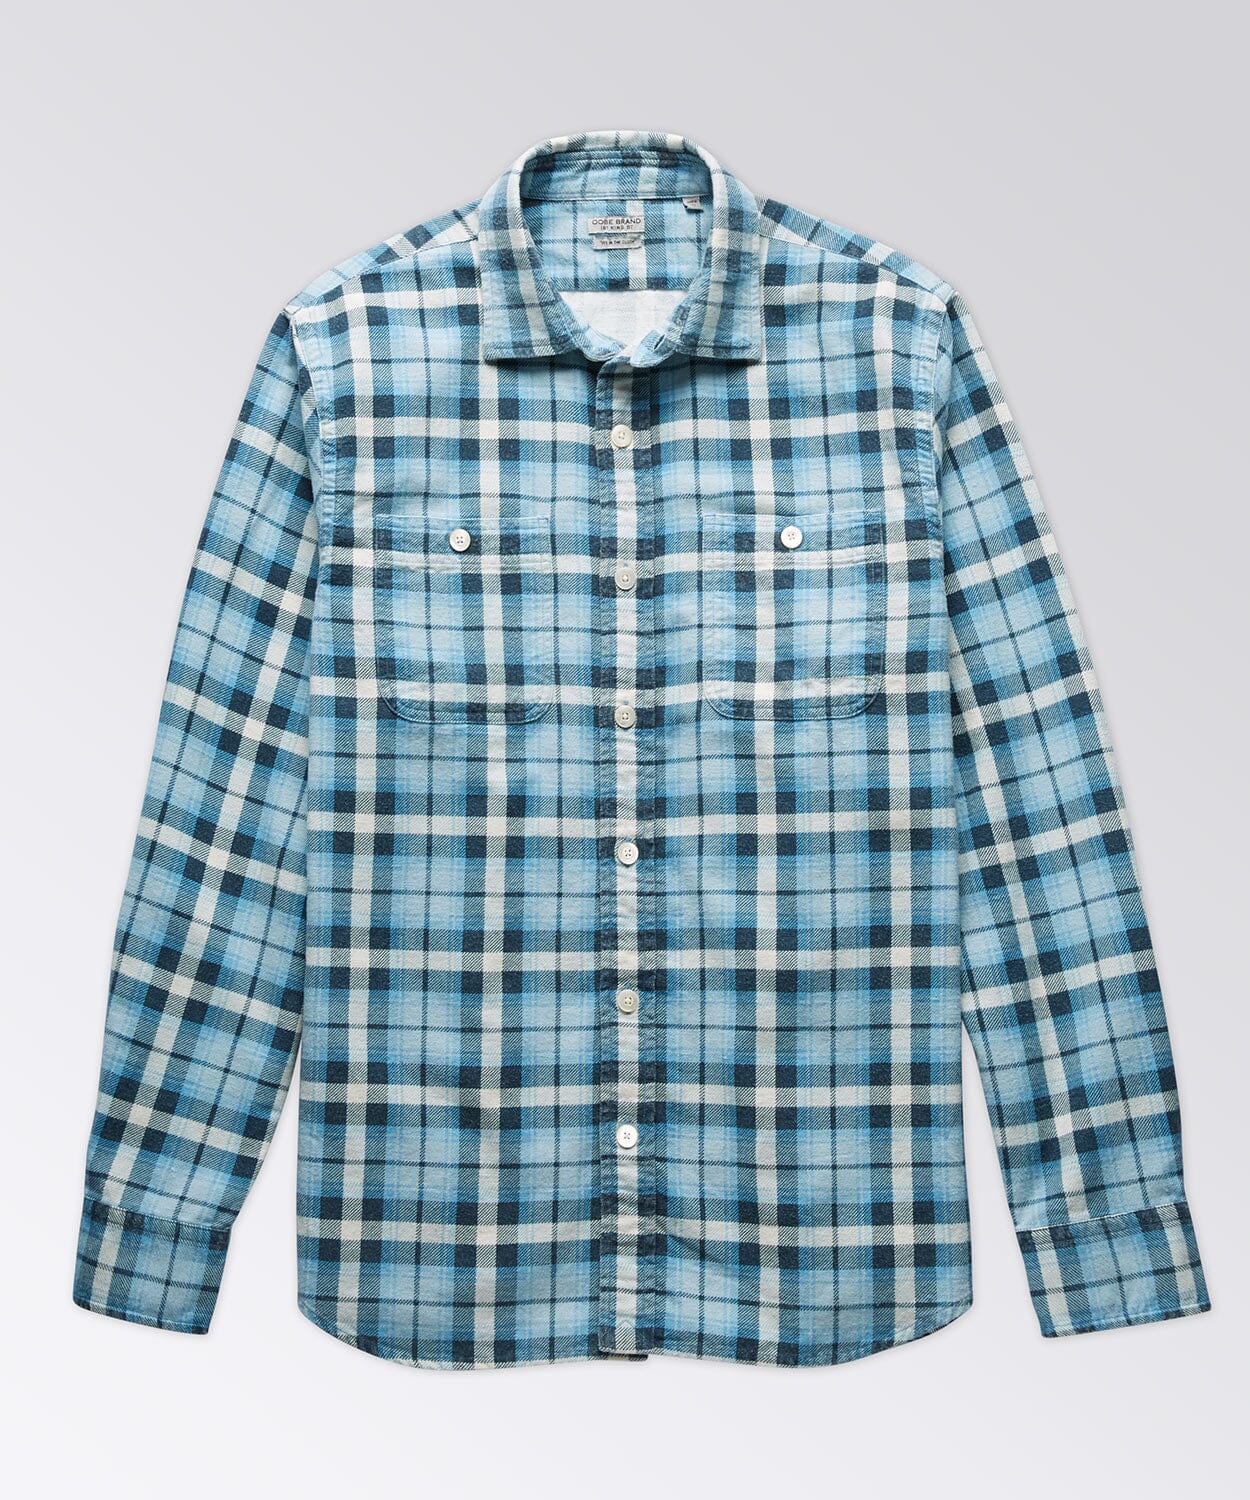 Marlan Flannel Workshirt Button Downs OOBE BRAND Blue White Flannel Plaid S 